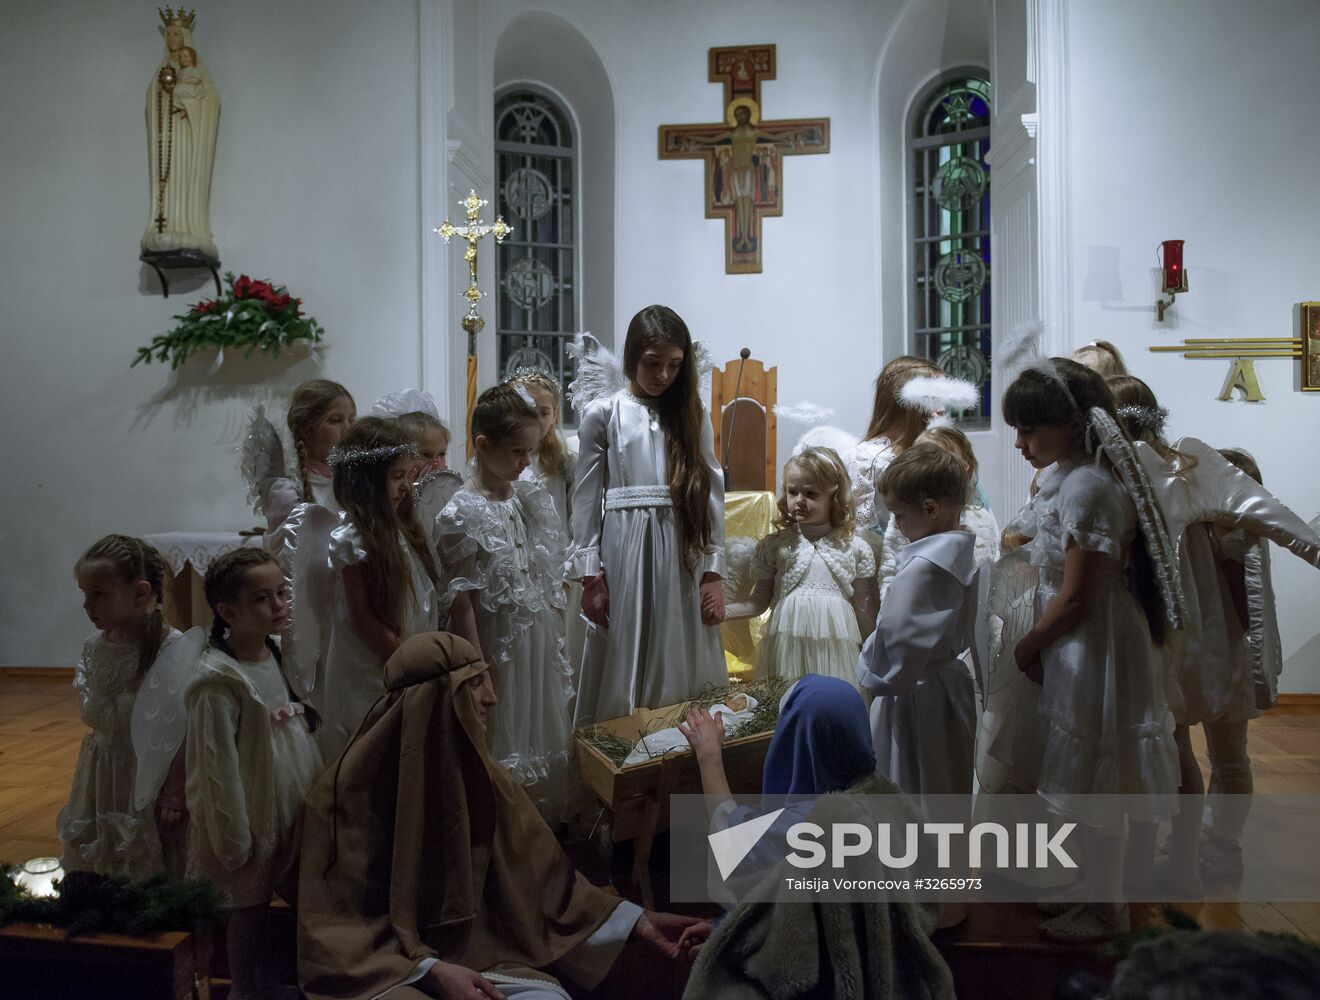 Catholic Christmas celebration in Russia